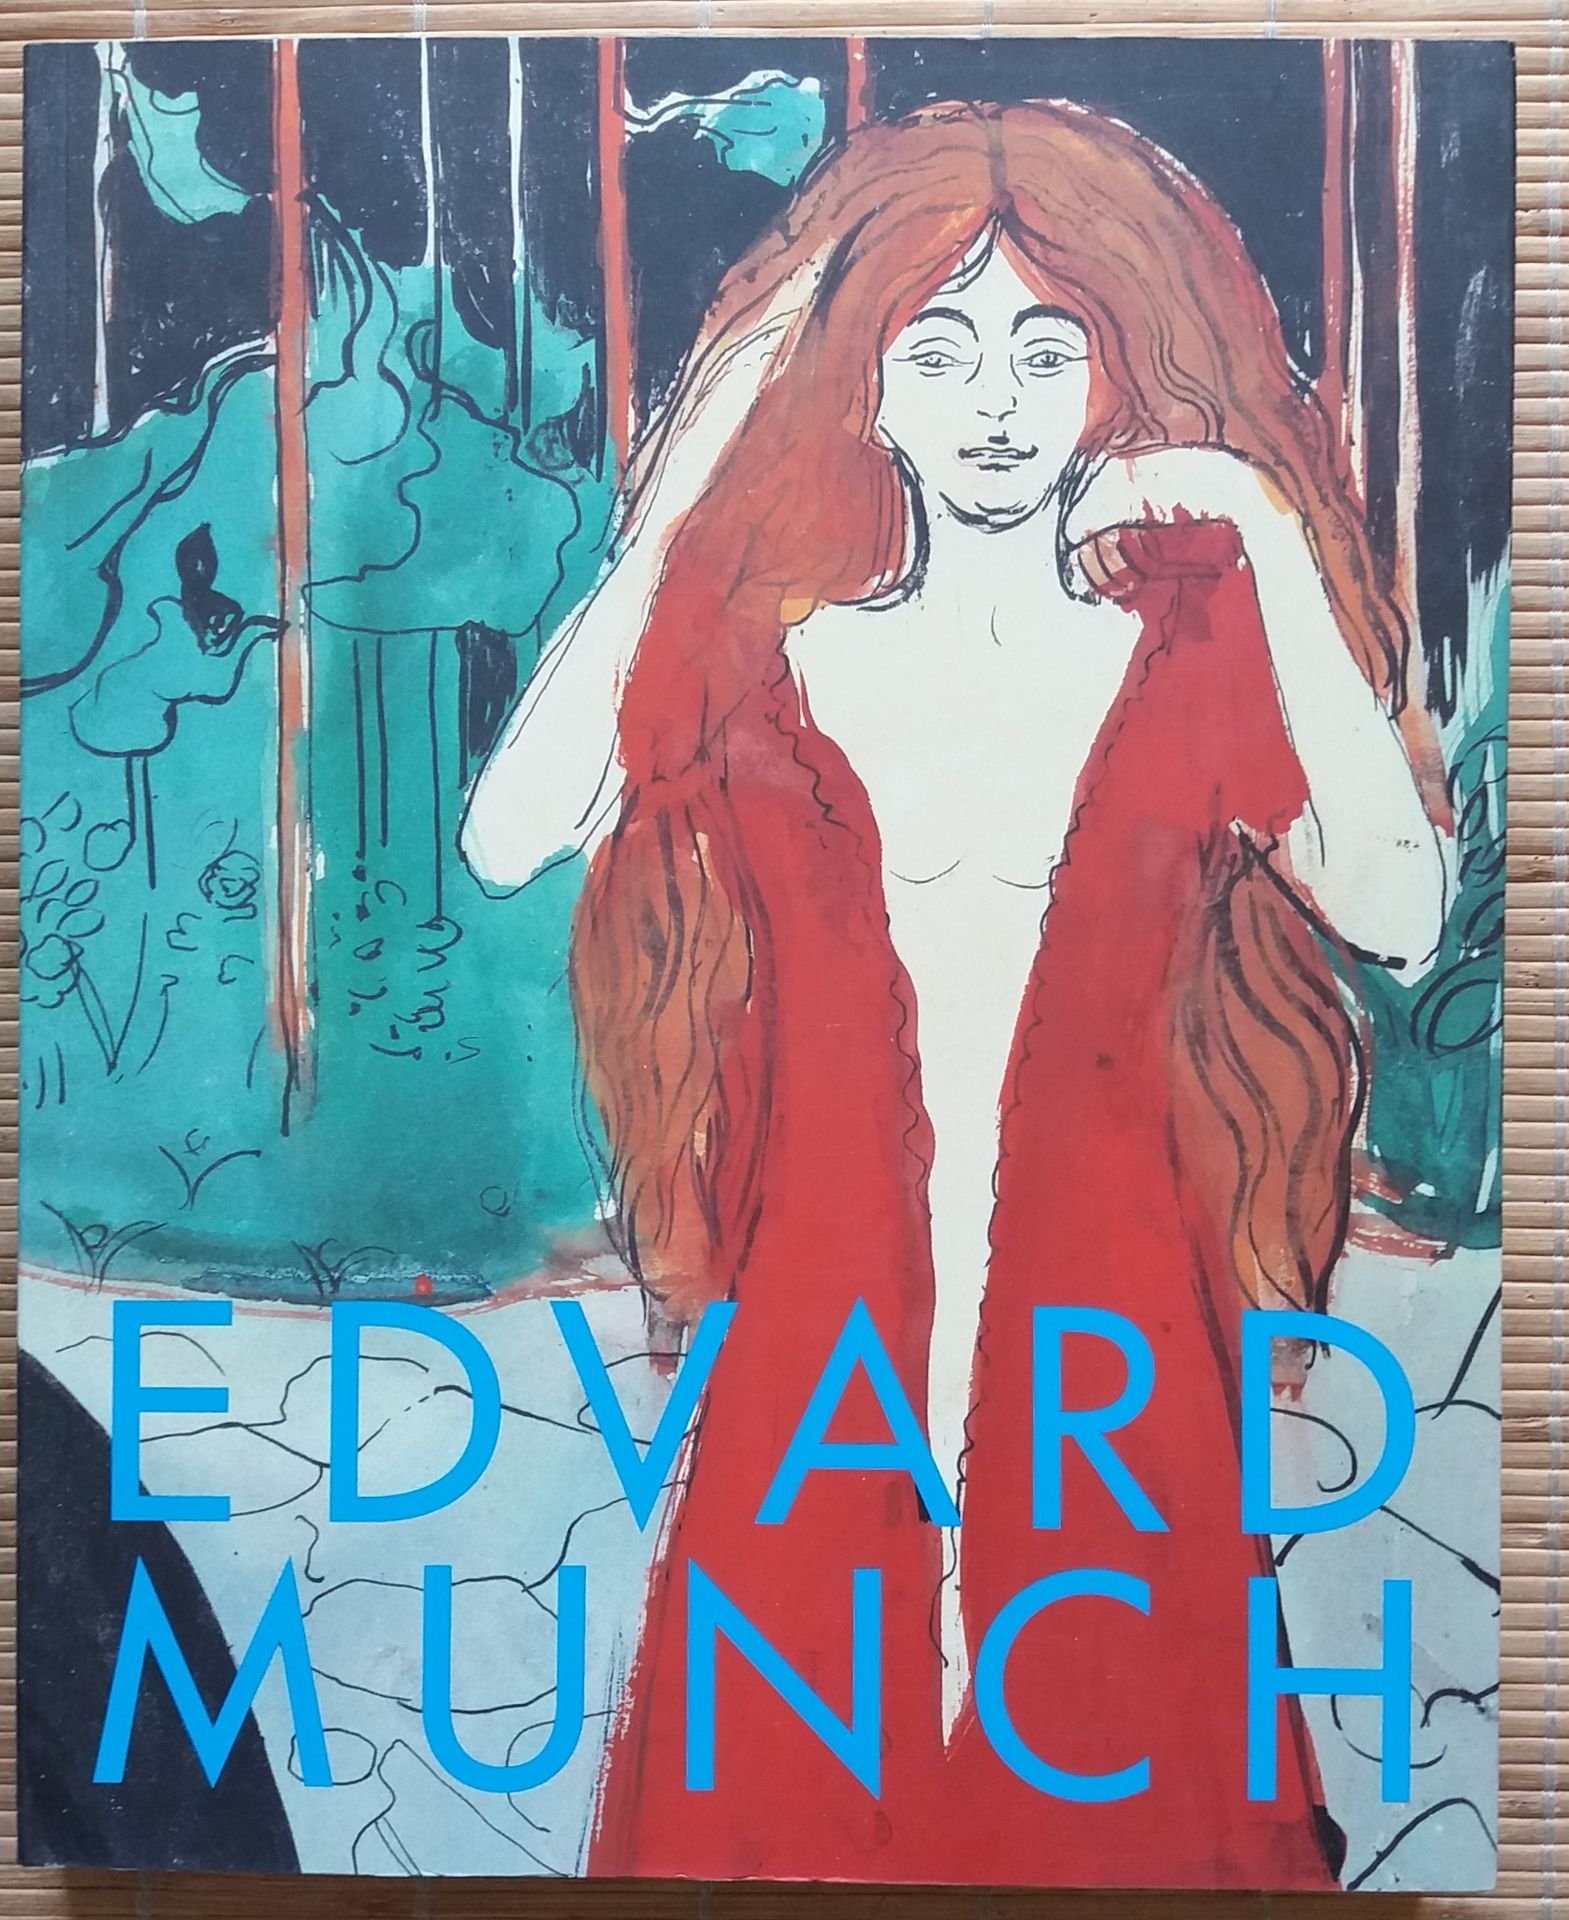 Null [ART - MUNCH, EDVARD]
4 ouvrages sur Edvard Munch.

*Edvard Munch. L'œil mo&hellip;